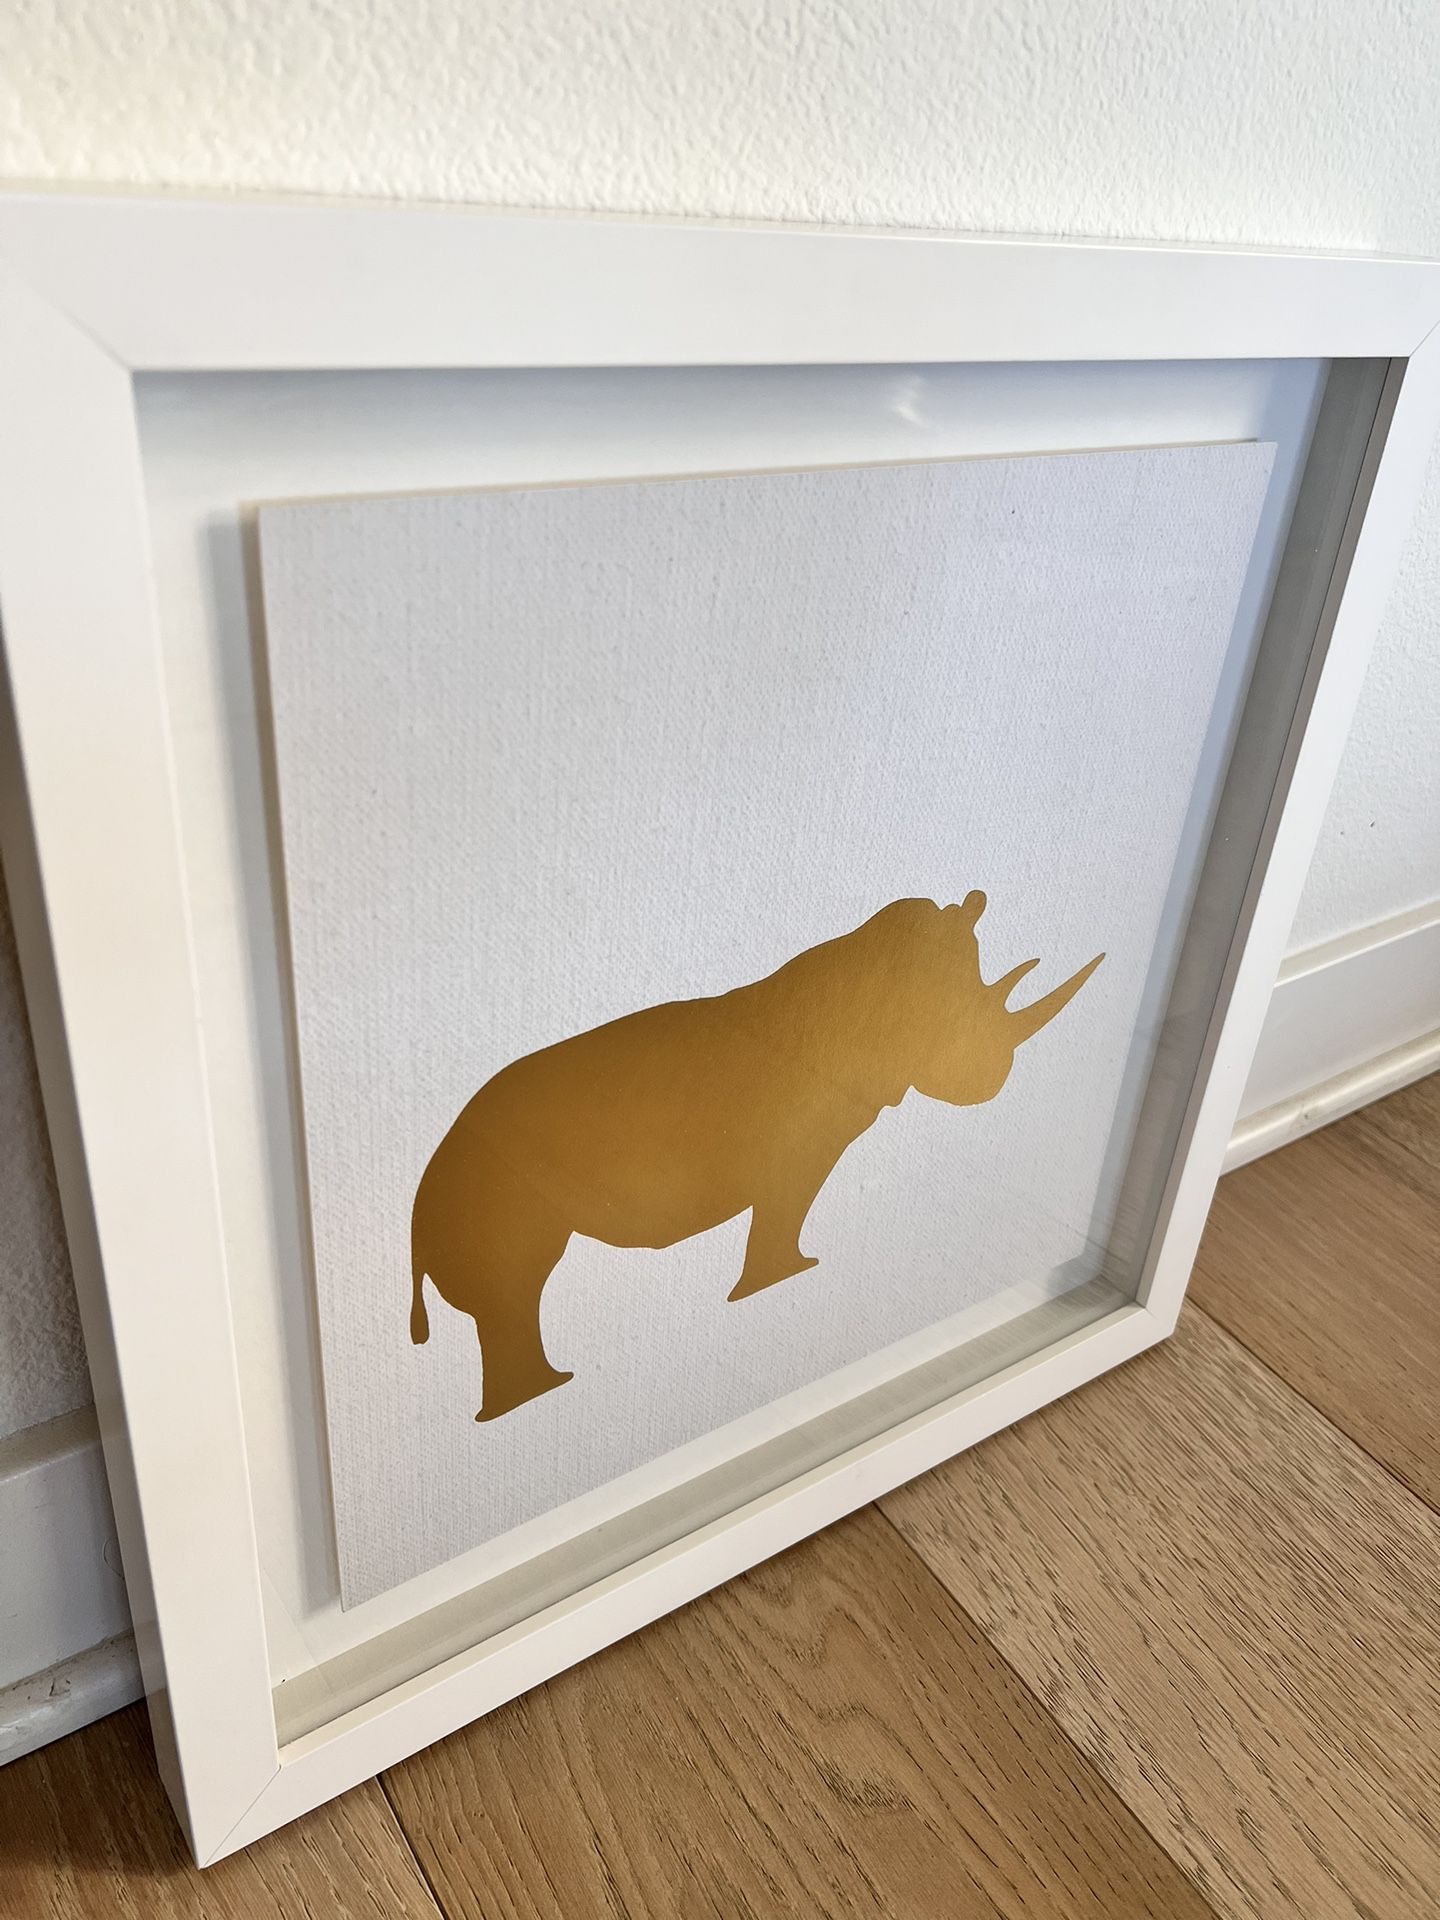 Restoration Hardware Nursery Wall Art - Gold Foil Rhinoceros